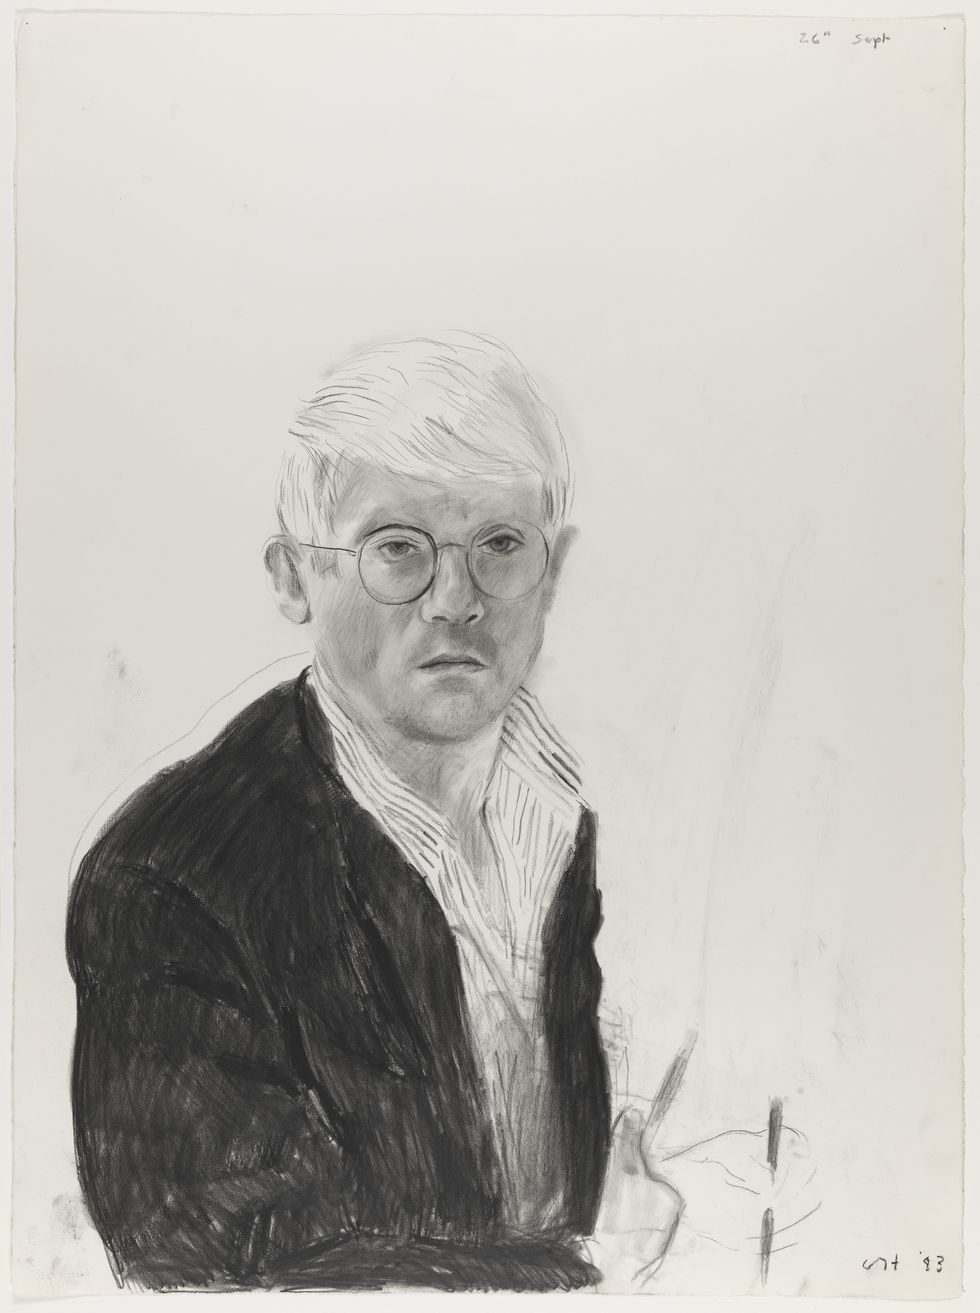 david hockney, 'self portrait 26th sept' 1983, charcoal on paper 30 x 22 ½” © david hockney